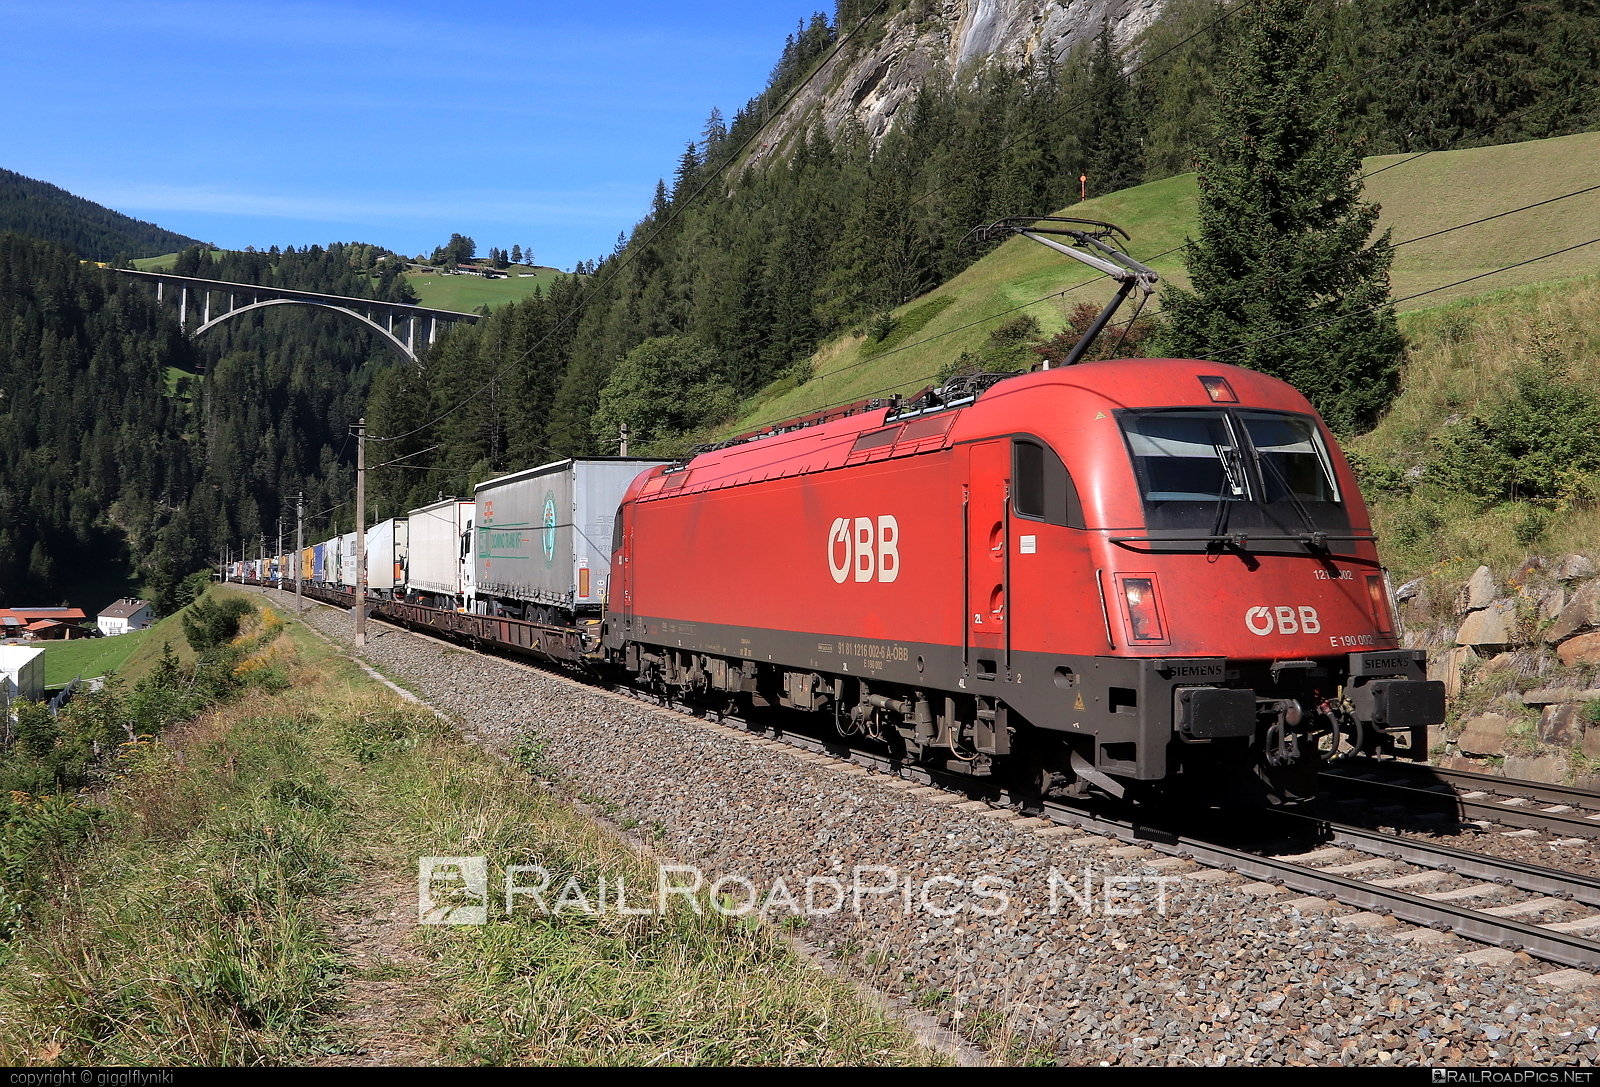 Siemens ES 64 U4 - 1216 002 operated by Rail Cargo Austria AG #es64 #es64u4 #eurosprinter #flatwagon #obb #osterreichischebundesbahnen #rcw #siemens #siemensEs64 #siemensEs64u4 #siemenstaurus #taurus #tauruslocomotive #truck